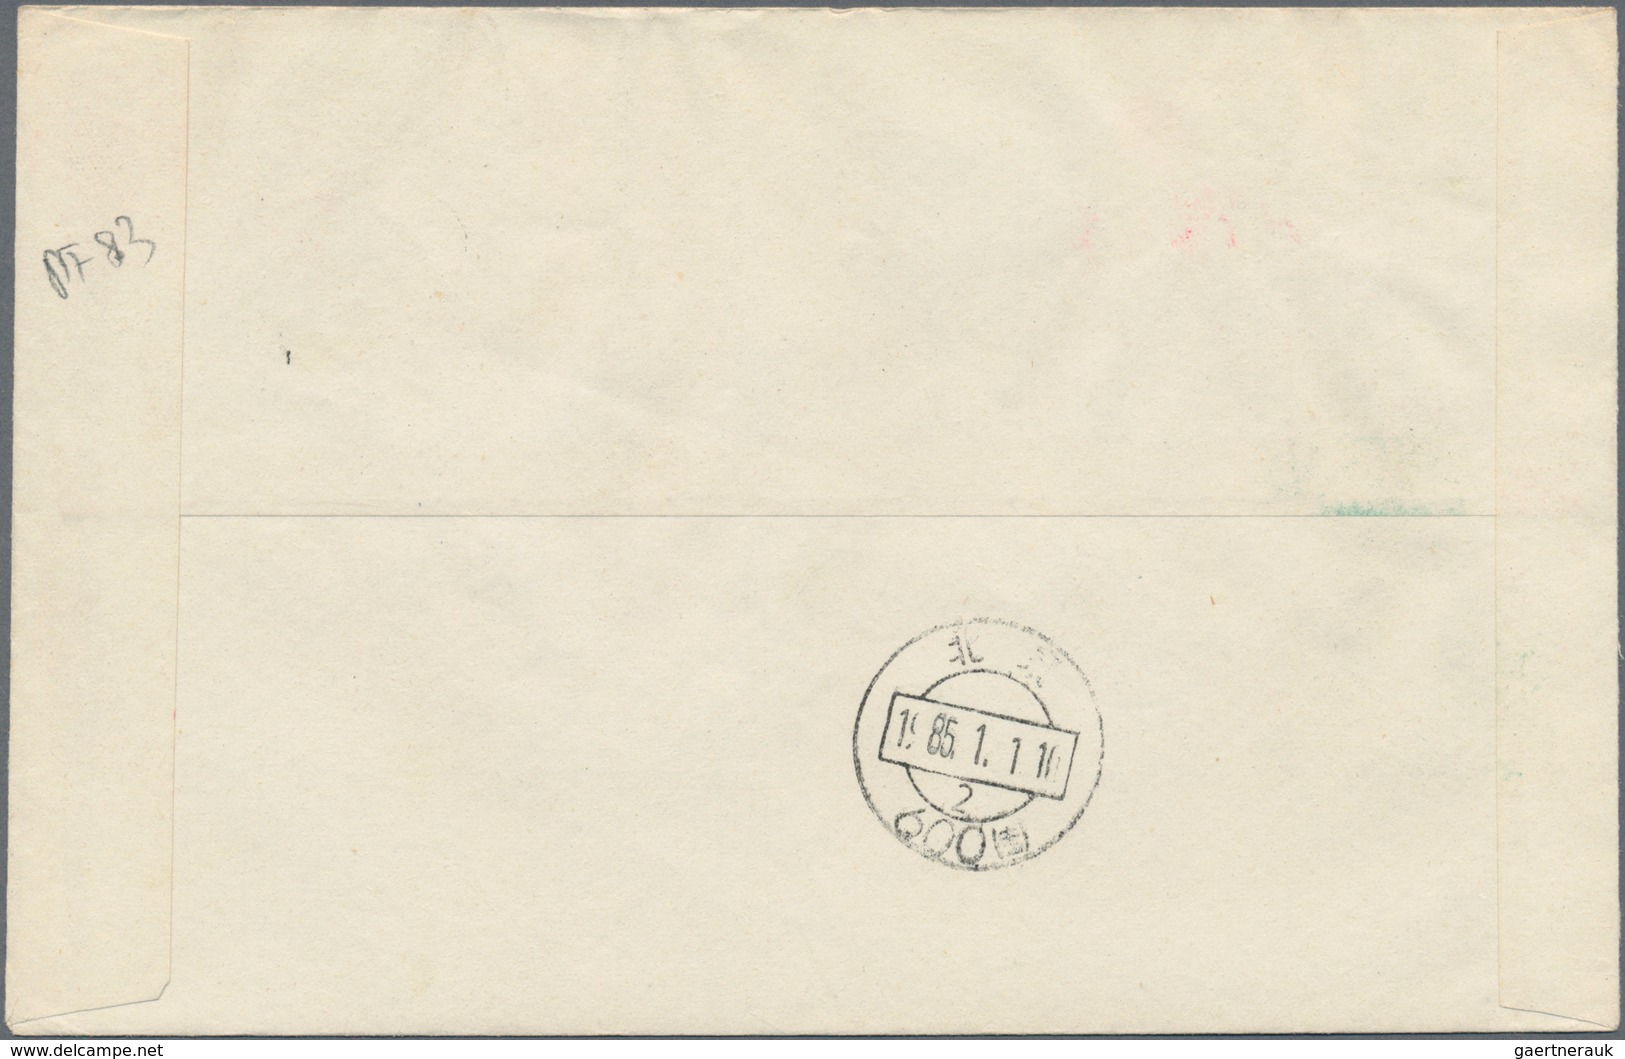 China - Volksrepublik - Ganzsachen: 1970/73, "paper Cut" Envelope 10 F. Carmine Uprated 3 F. Brown ( - Cartes Postales